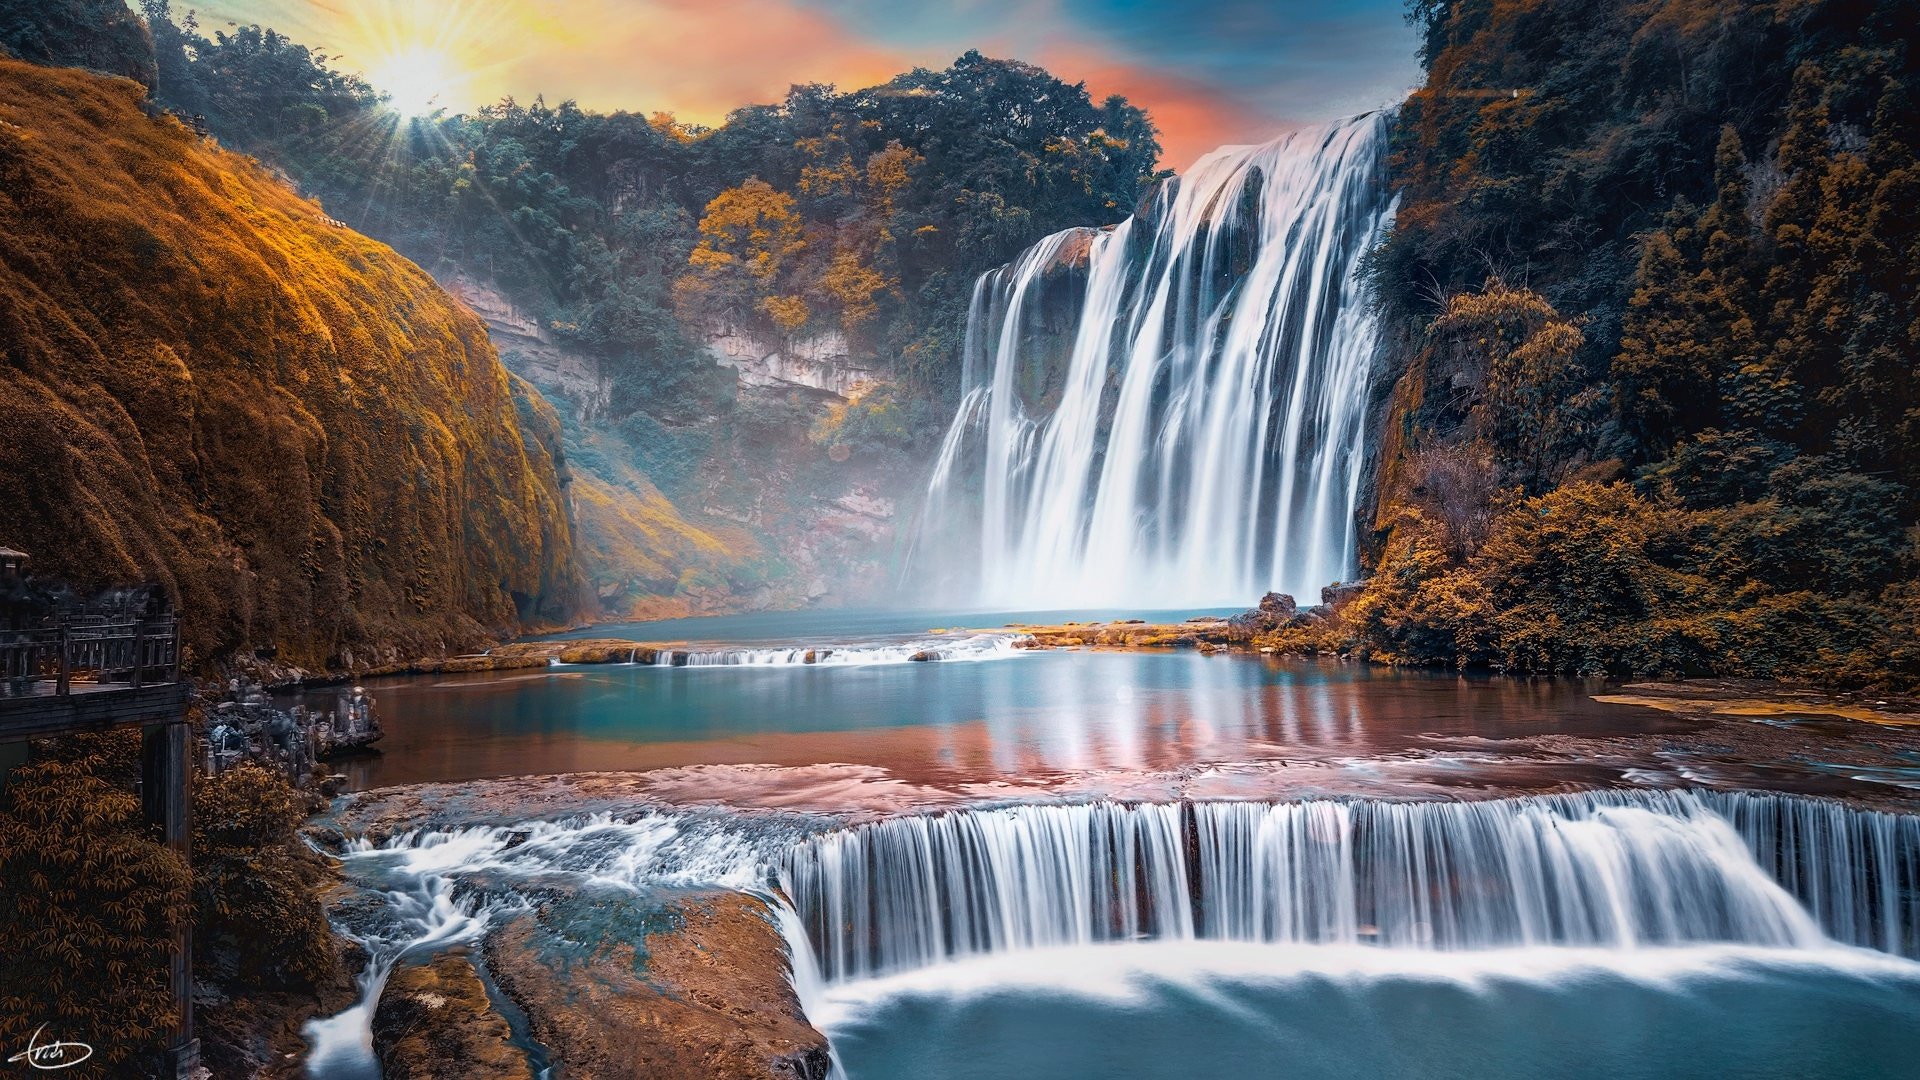 Download River Nature Waterfall Hd Wallpaper